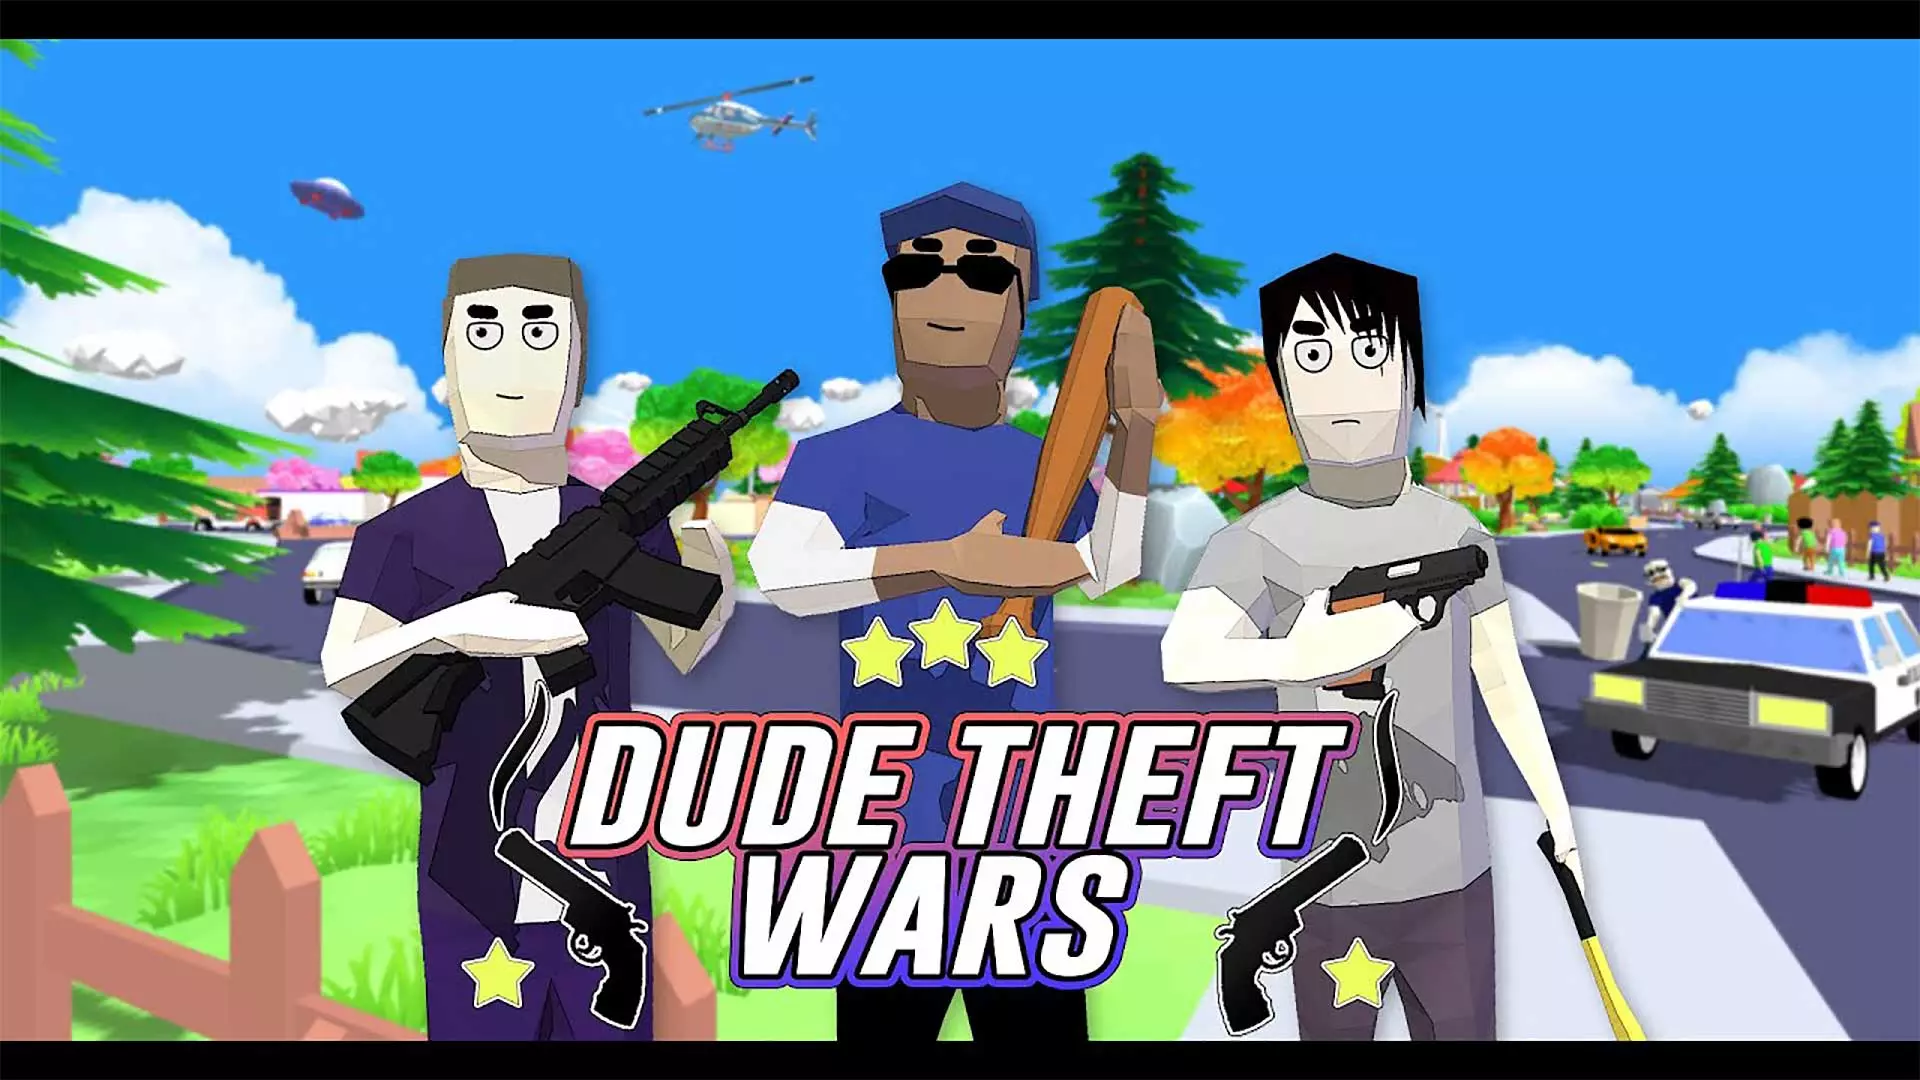 Dude theft wars offline. Dude Theft Wars. Dude Theft Wars полиция. Dude Theft Wars 2017. Дуде Зефт ВАРС.